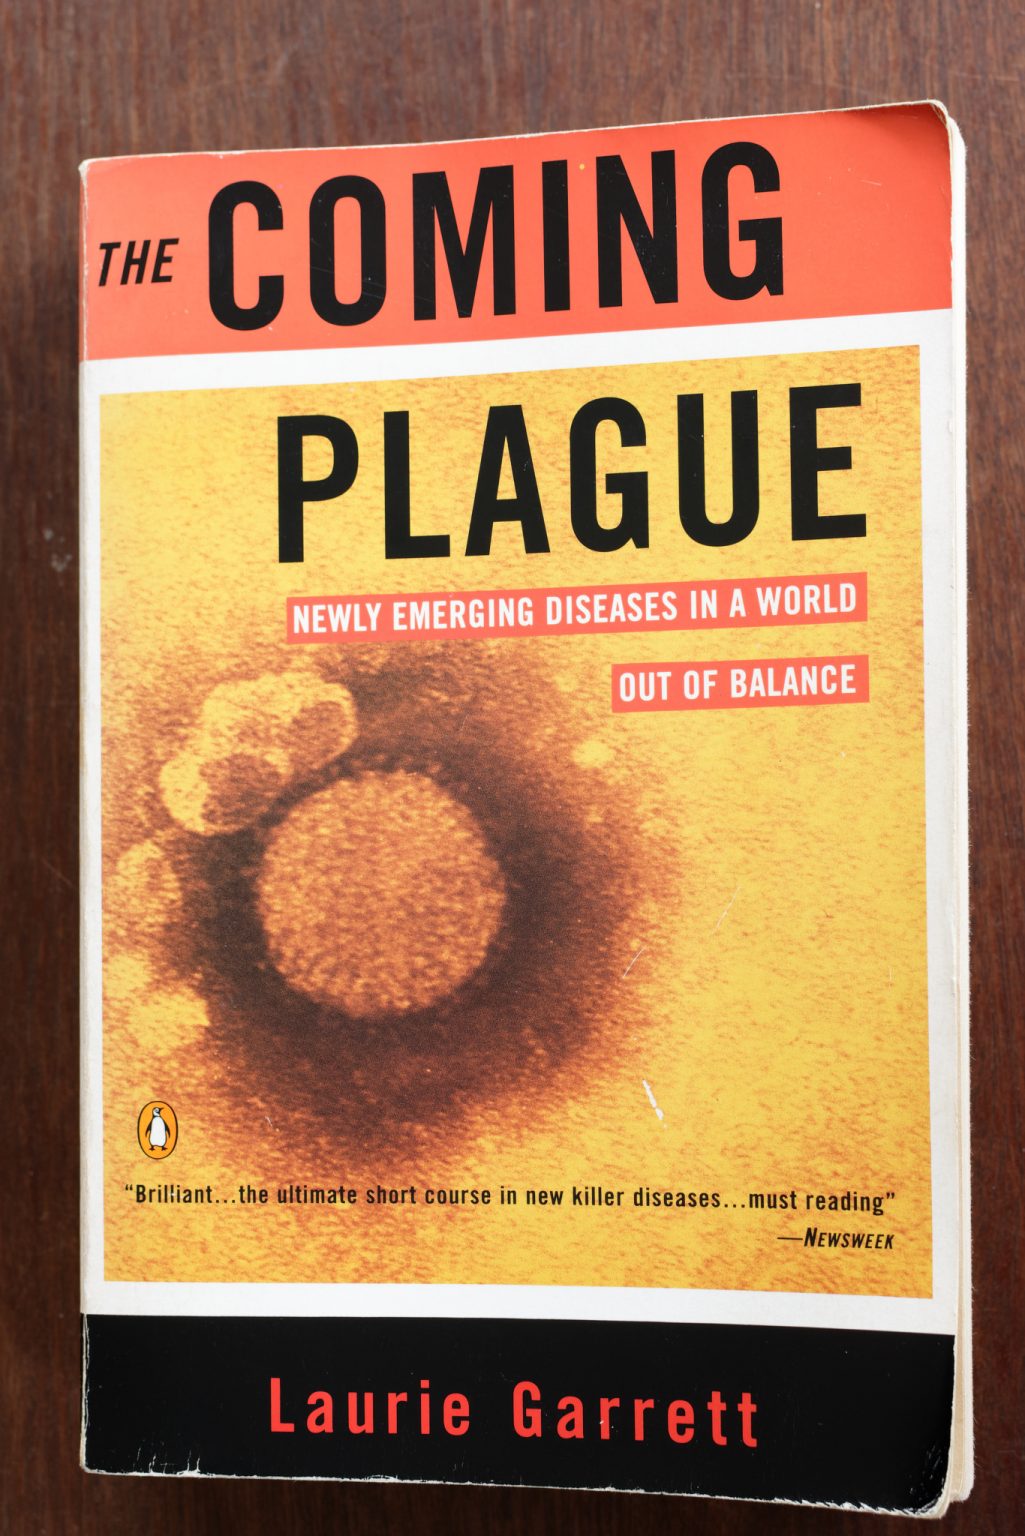 the coming plague part 2 of 2 laurie garrett